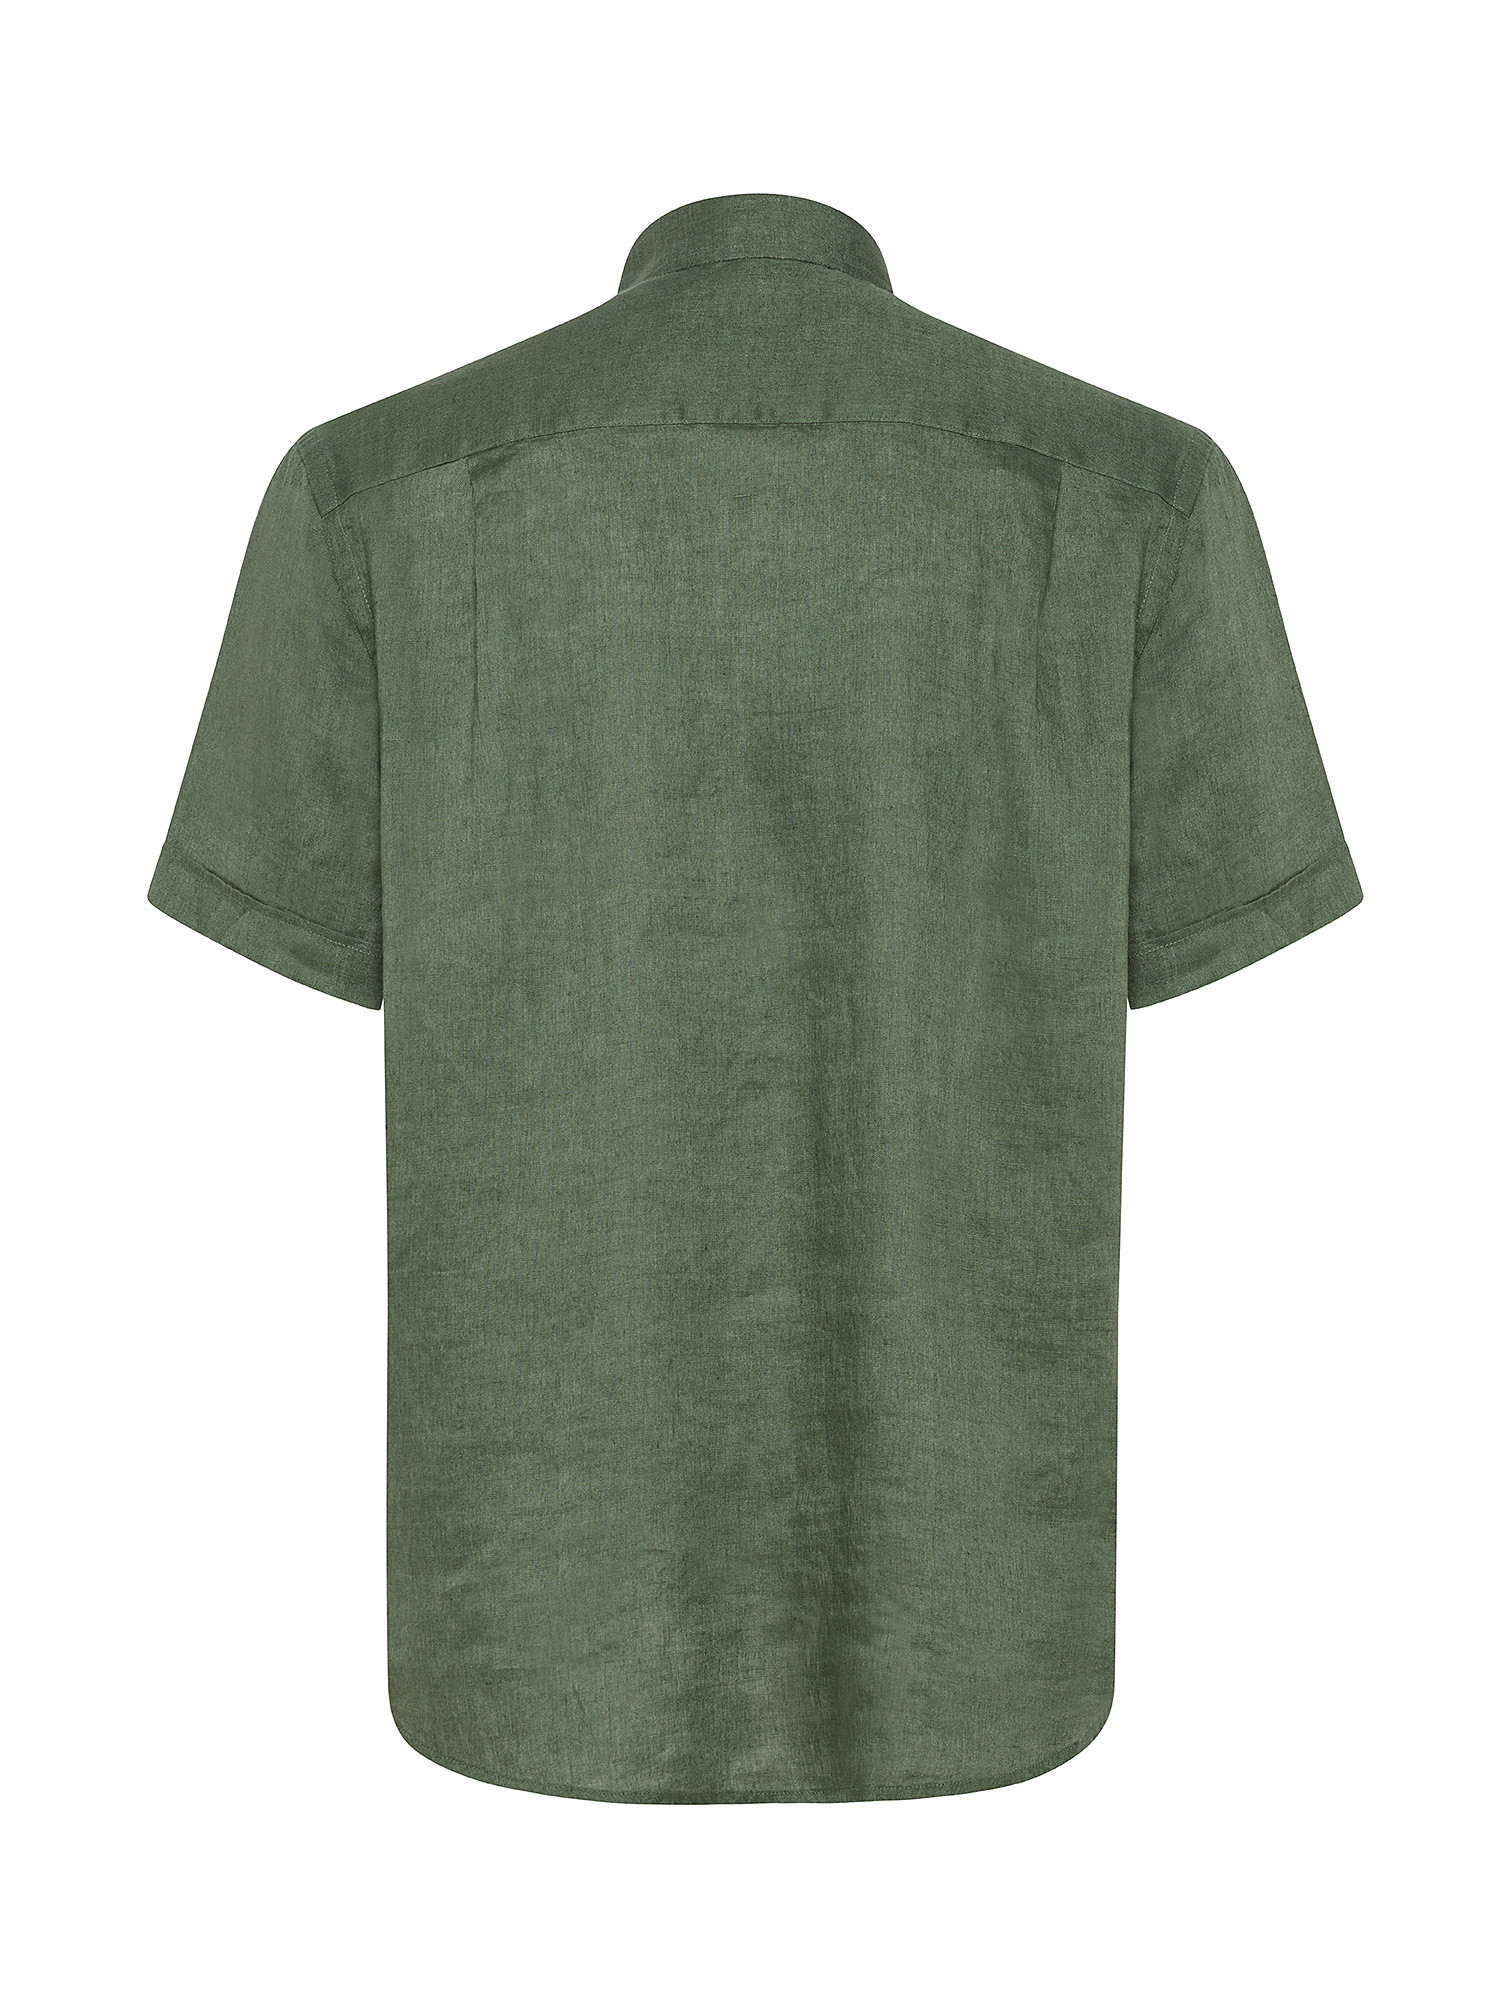 Luca D'Altieri - Regular fit shirt in pure linen, Green, large image number 1